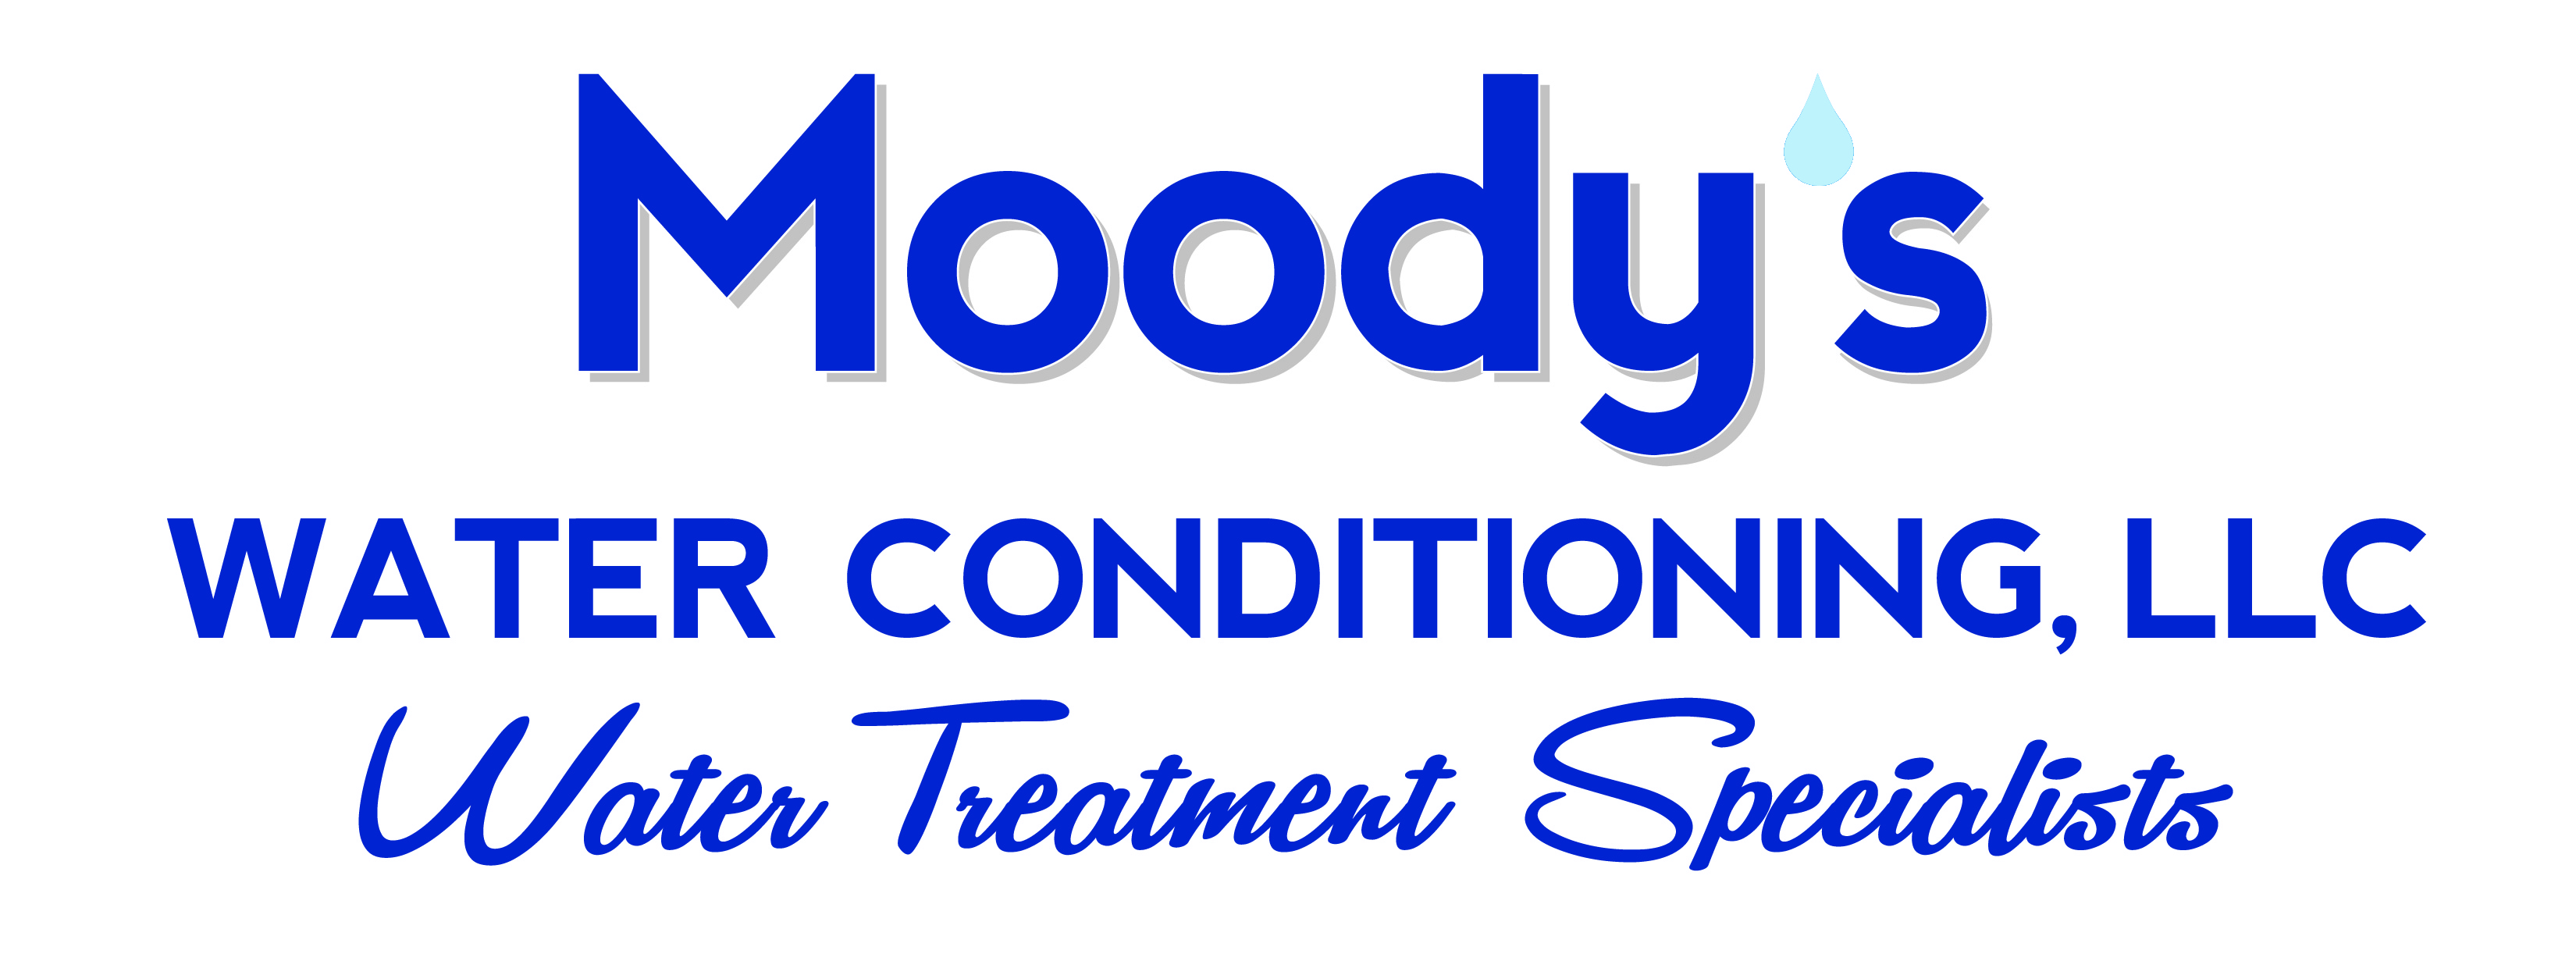 Moody's Water Conditioning, LLC Logo